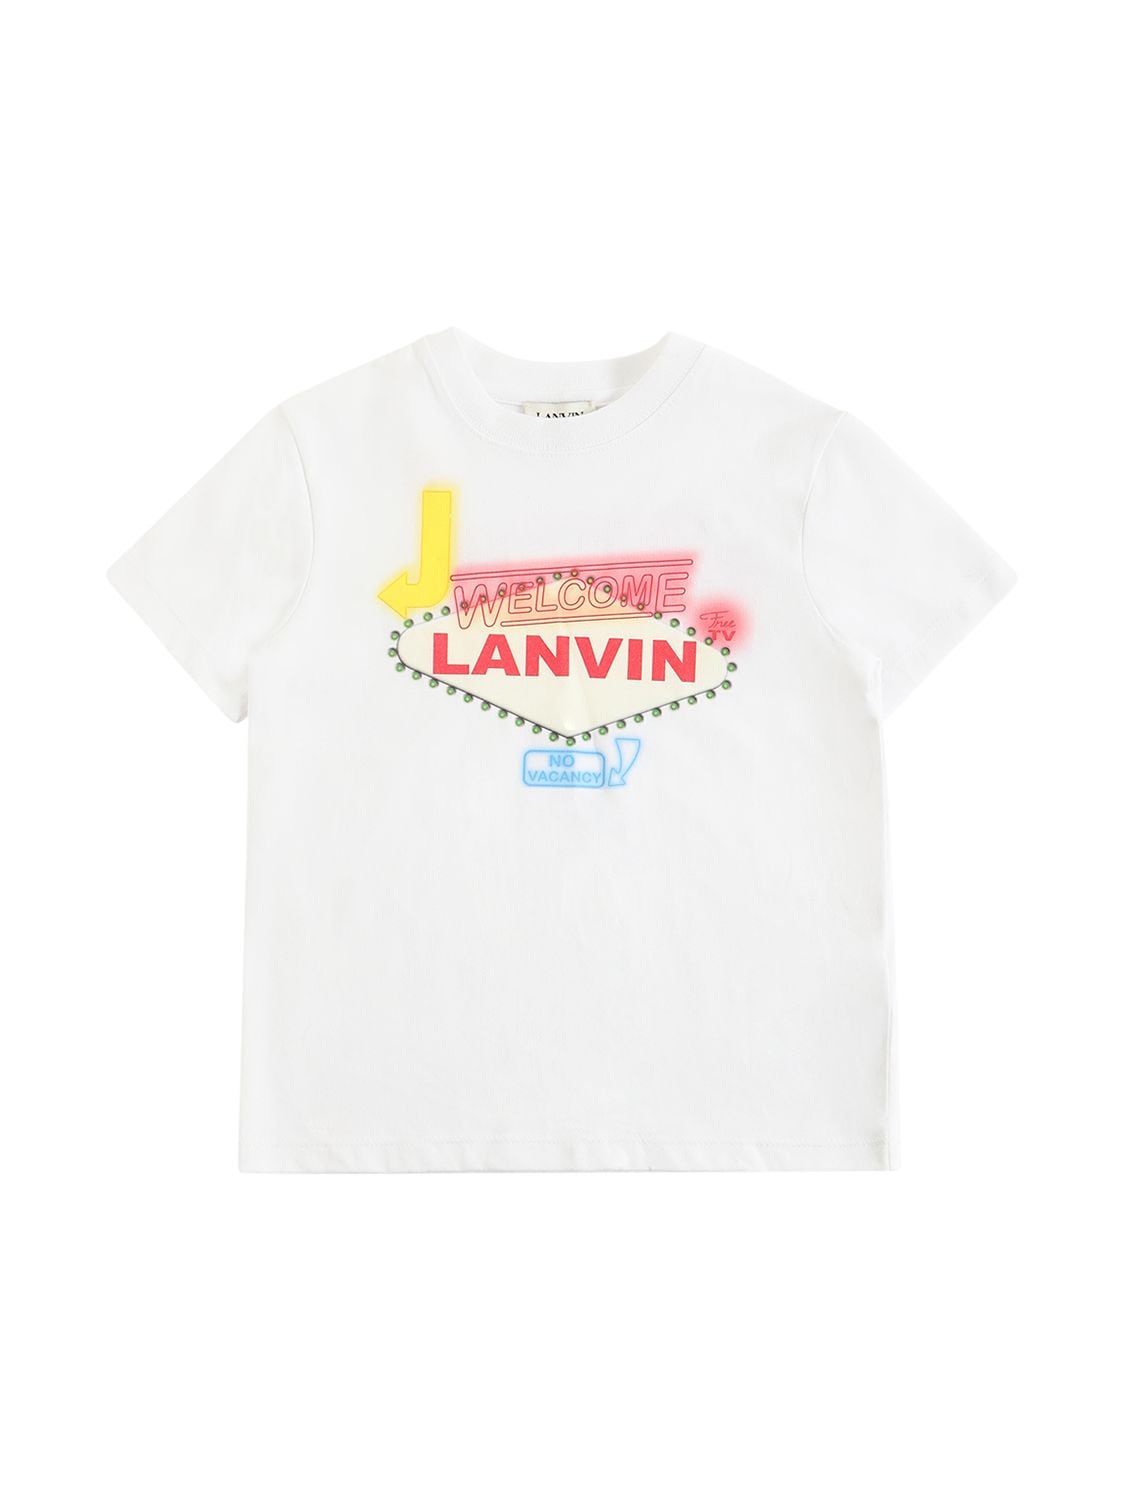 Lanvin Kids' Printed Cotton Jersey T-shirt In White